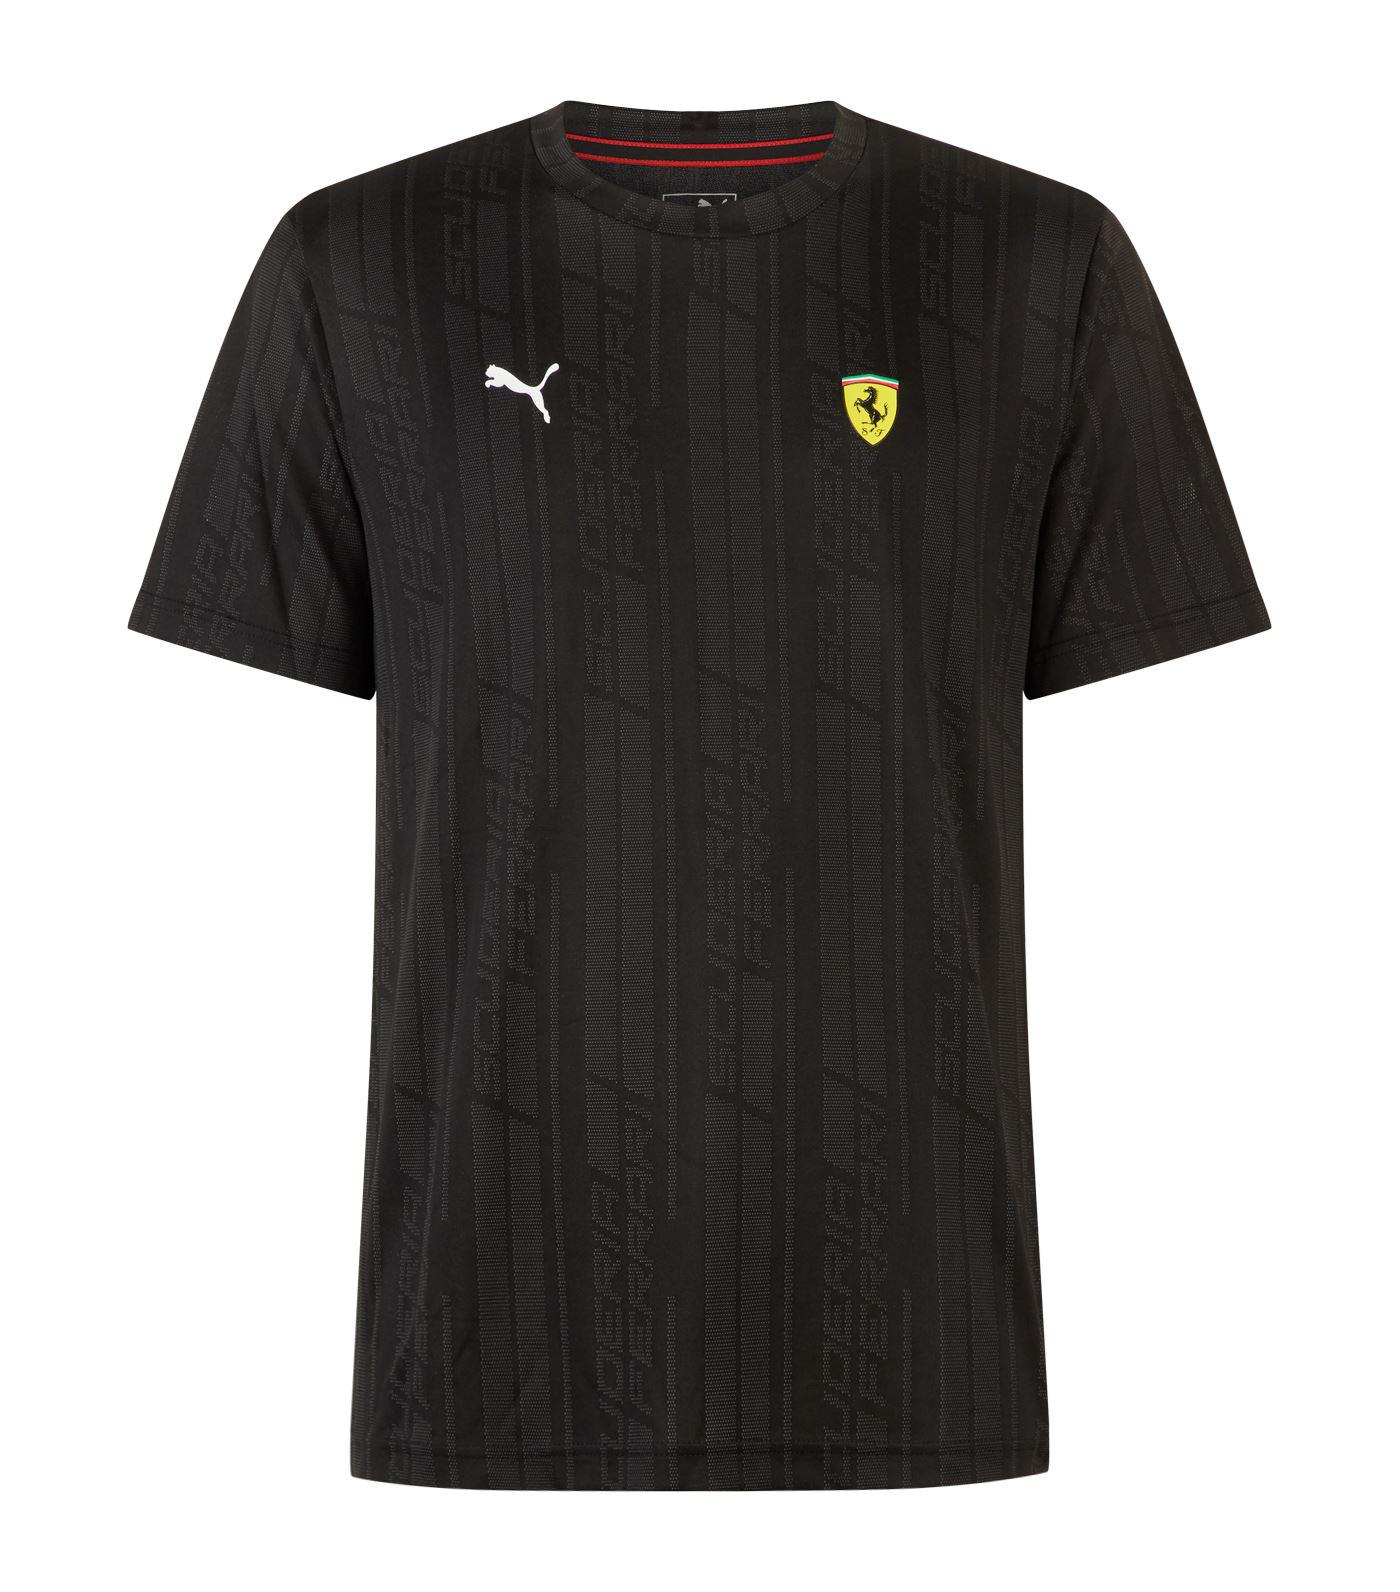 PUMA Ferrari Jacquard T-shirt in Black for Men - Lyst